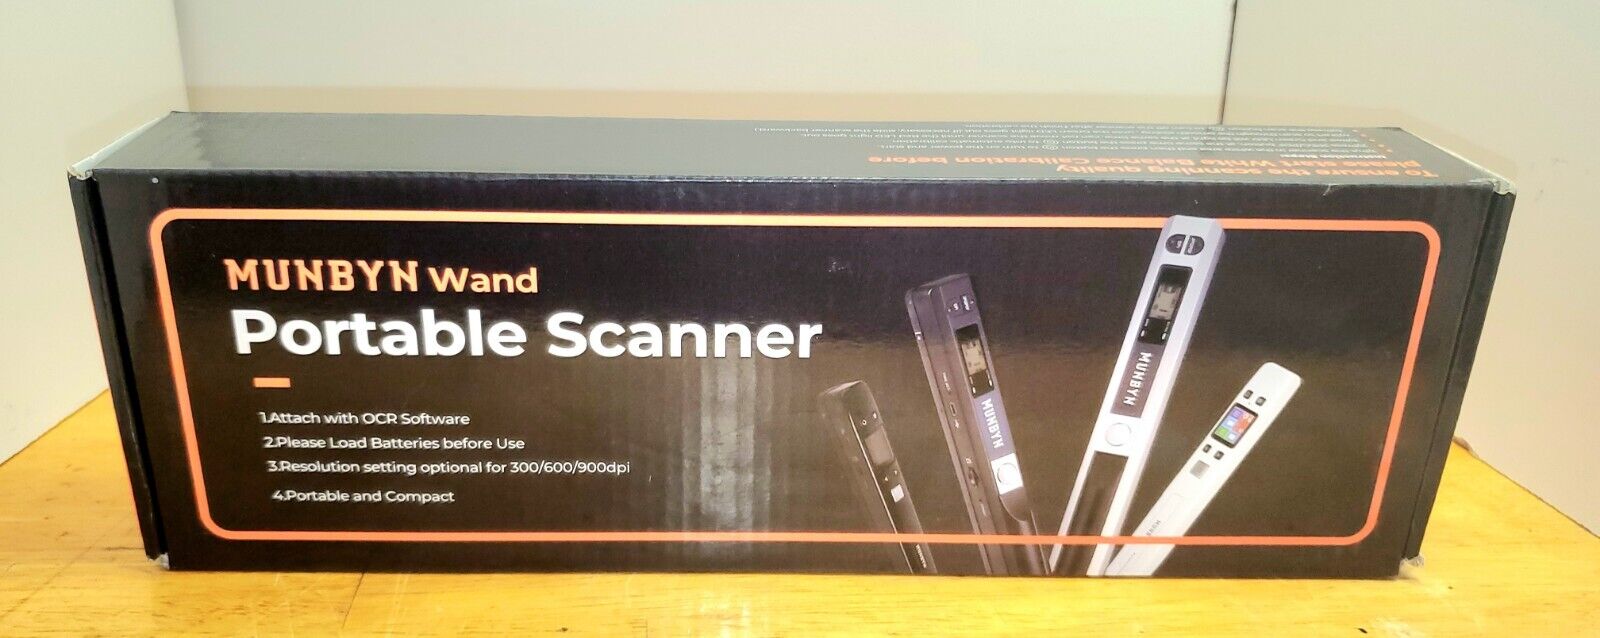 Munbyn Wand Portable Scanner MU-IDS001-Bk Open Box Black